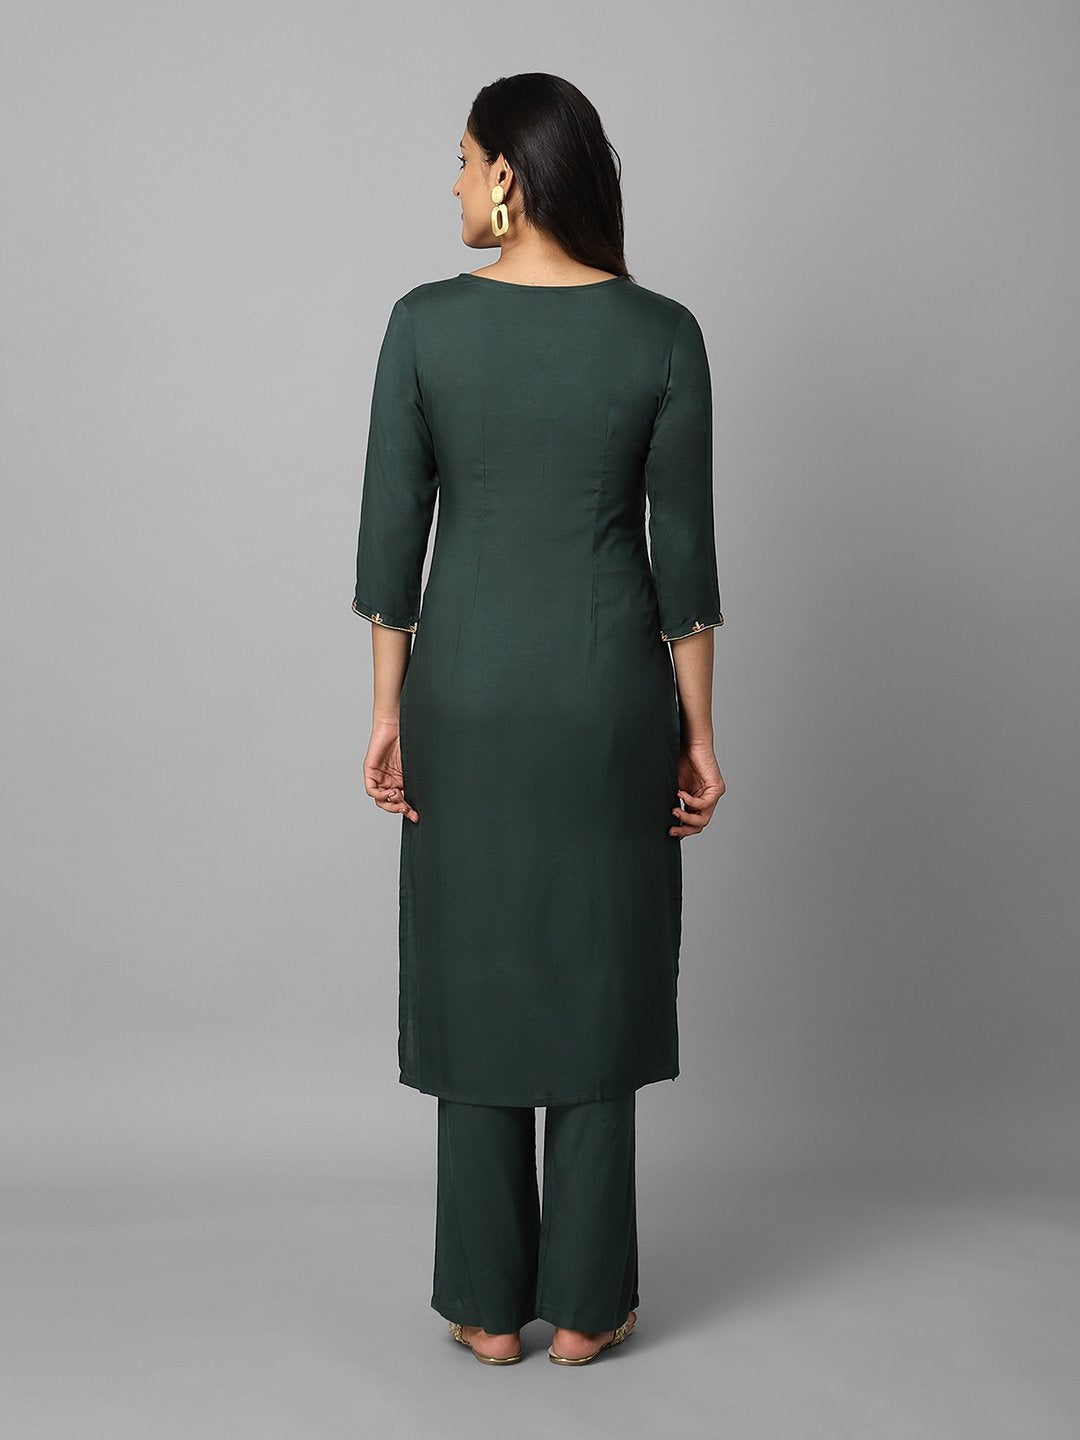 Women's Solid Dark Green Embroidered Side Slit Straight Kurta And Palazzo Set - Azira